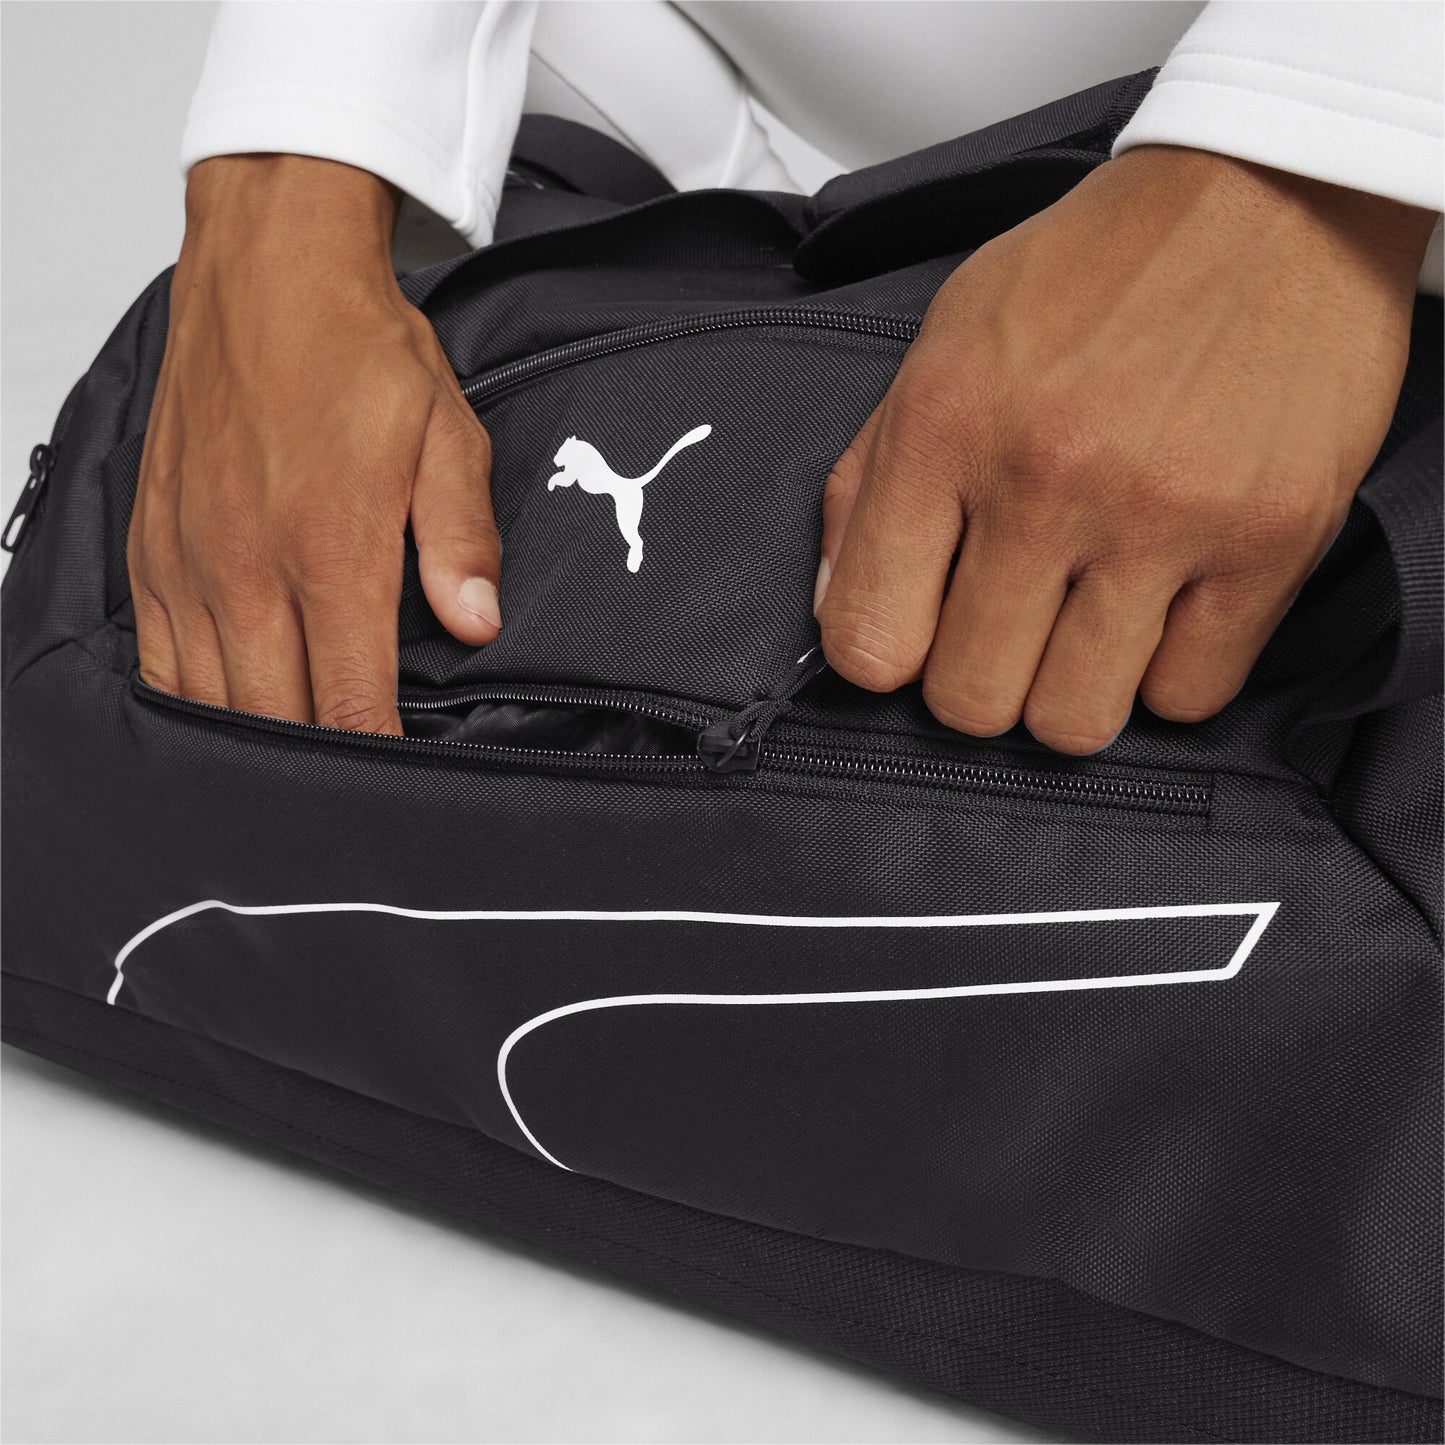 BORSONE - PUMA Fundamentals Sports Bag M